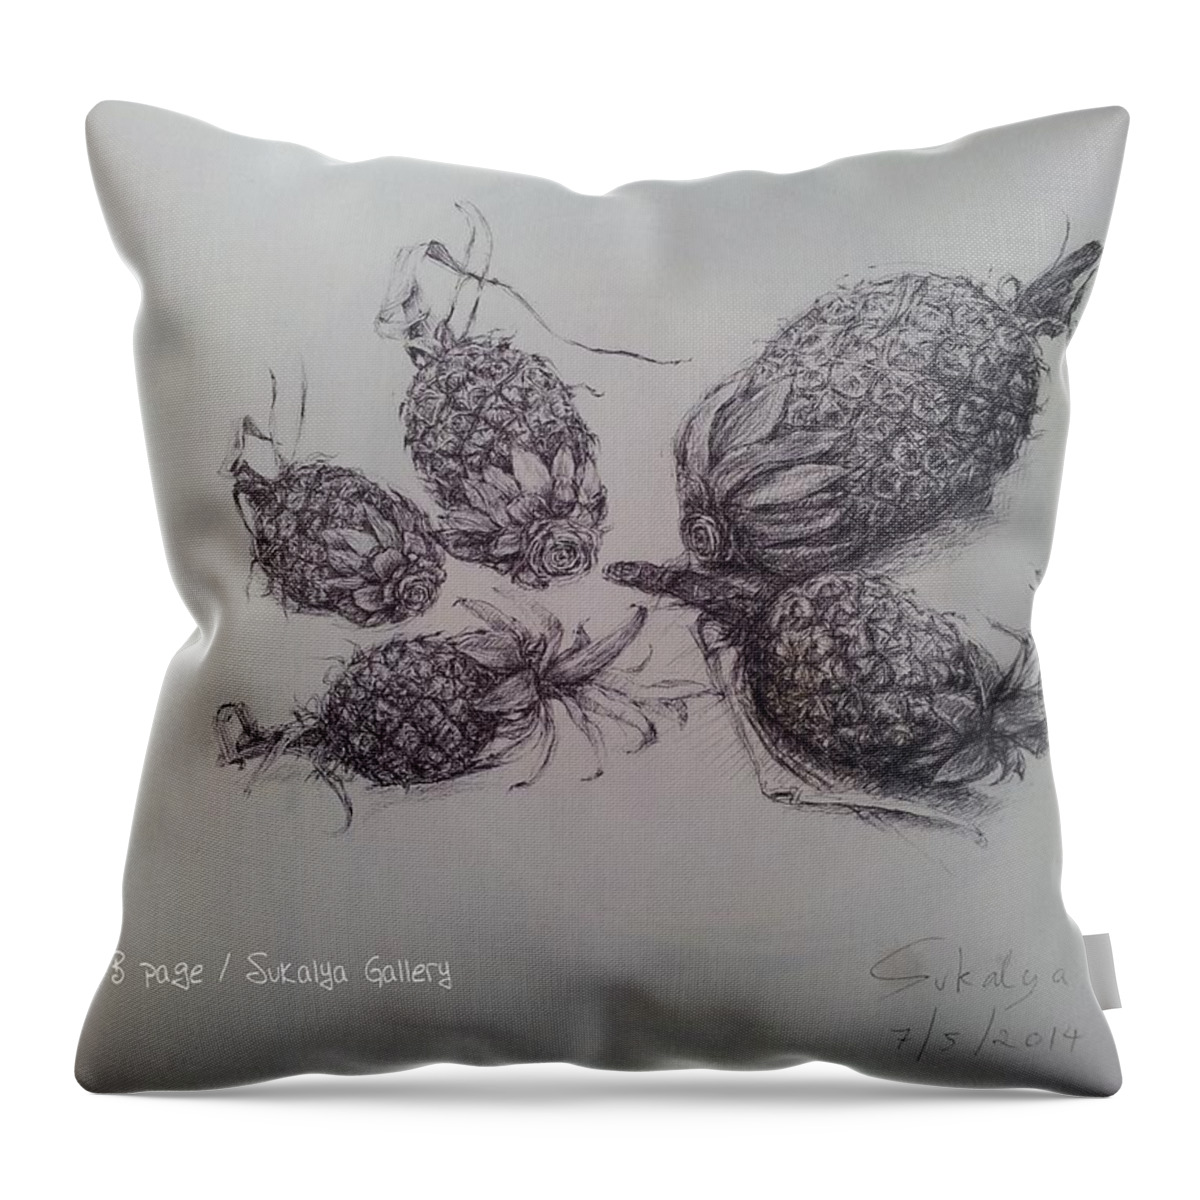  Throw Pillow featuring the drawing Still life 3 by Sukalya Chearanantana